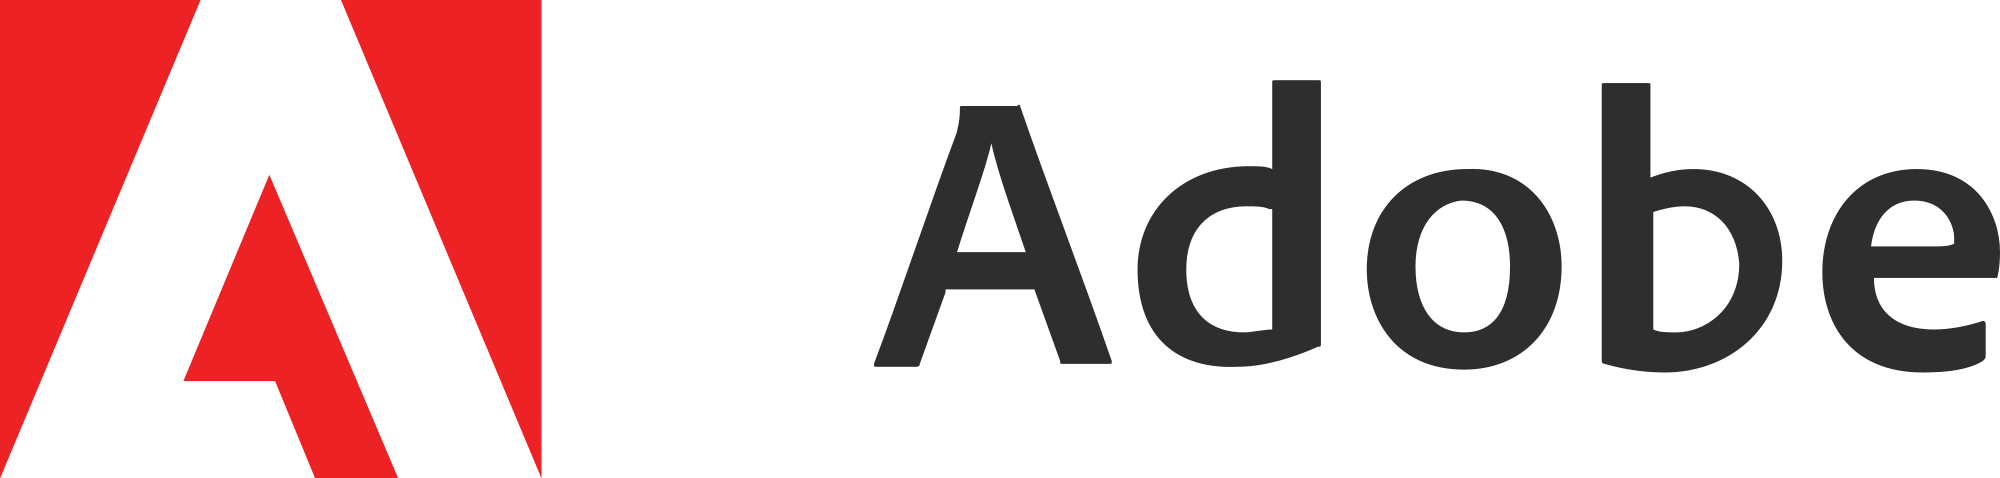 Adobe Logo - File:Adobe Systems logo and wordmark (2017).svg - Wikimedia Commons